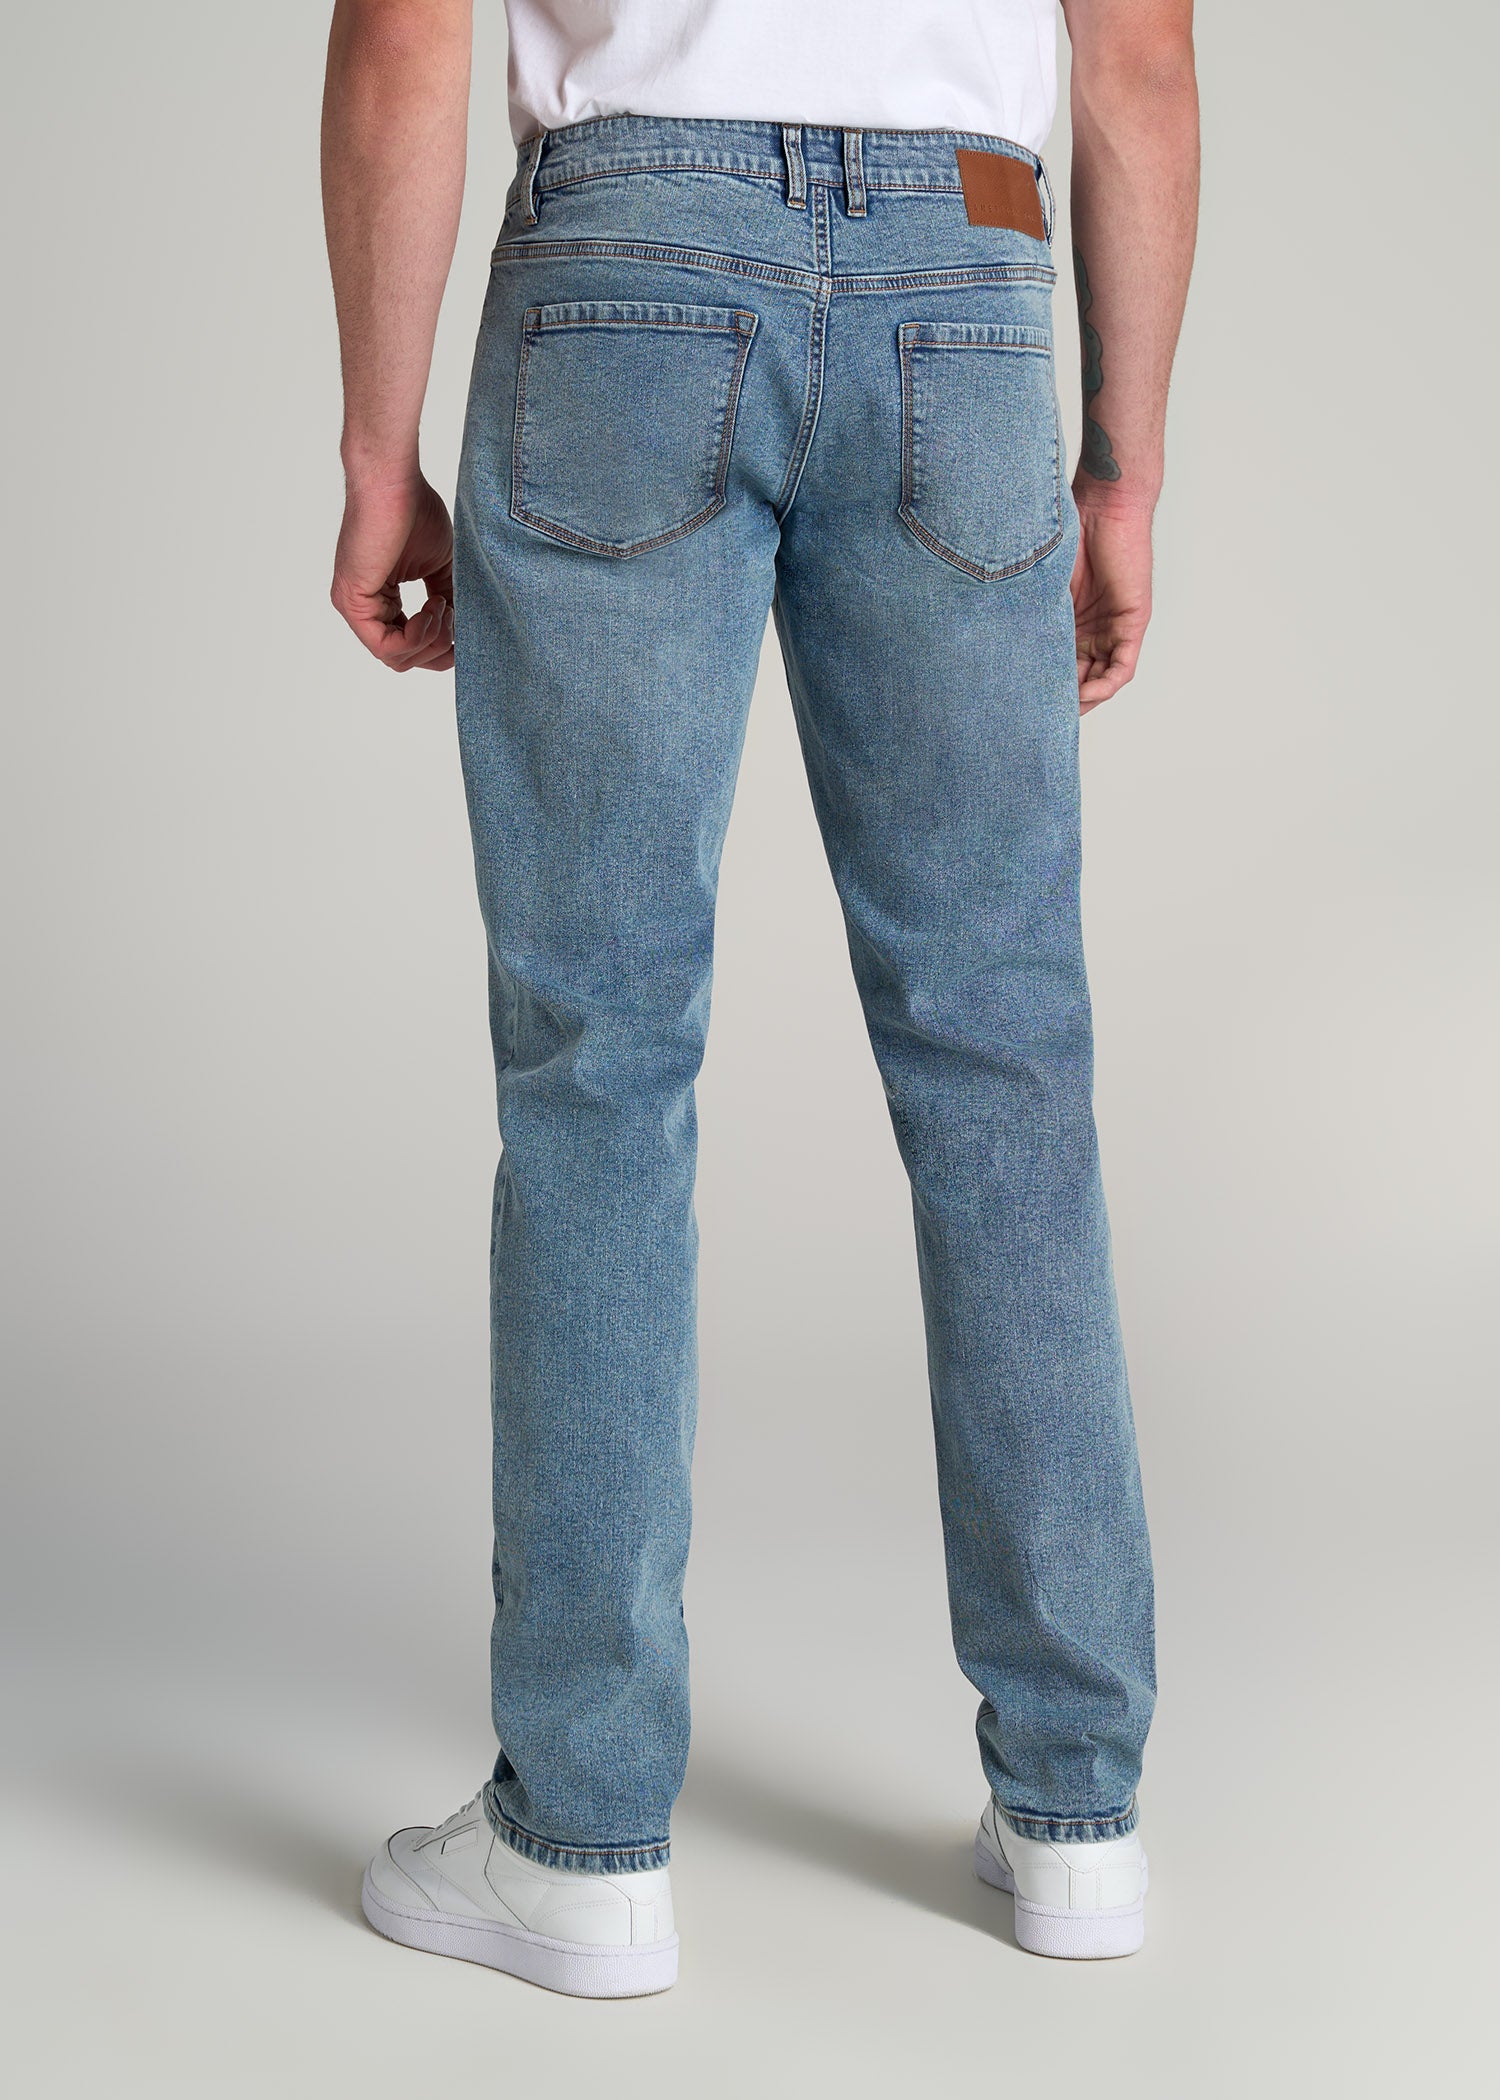 Buy Highlander Light Blue Tapered Fit Highly Distressed Stretchable Jeans  for Men Online at Rs.739 - Ketch